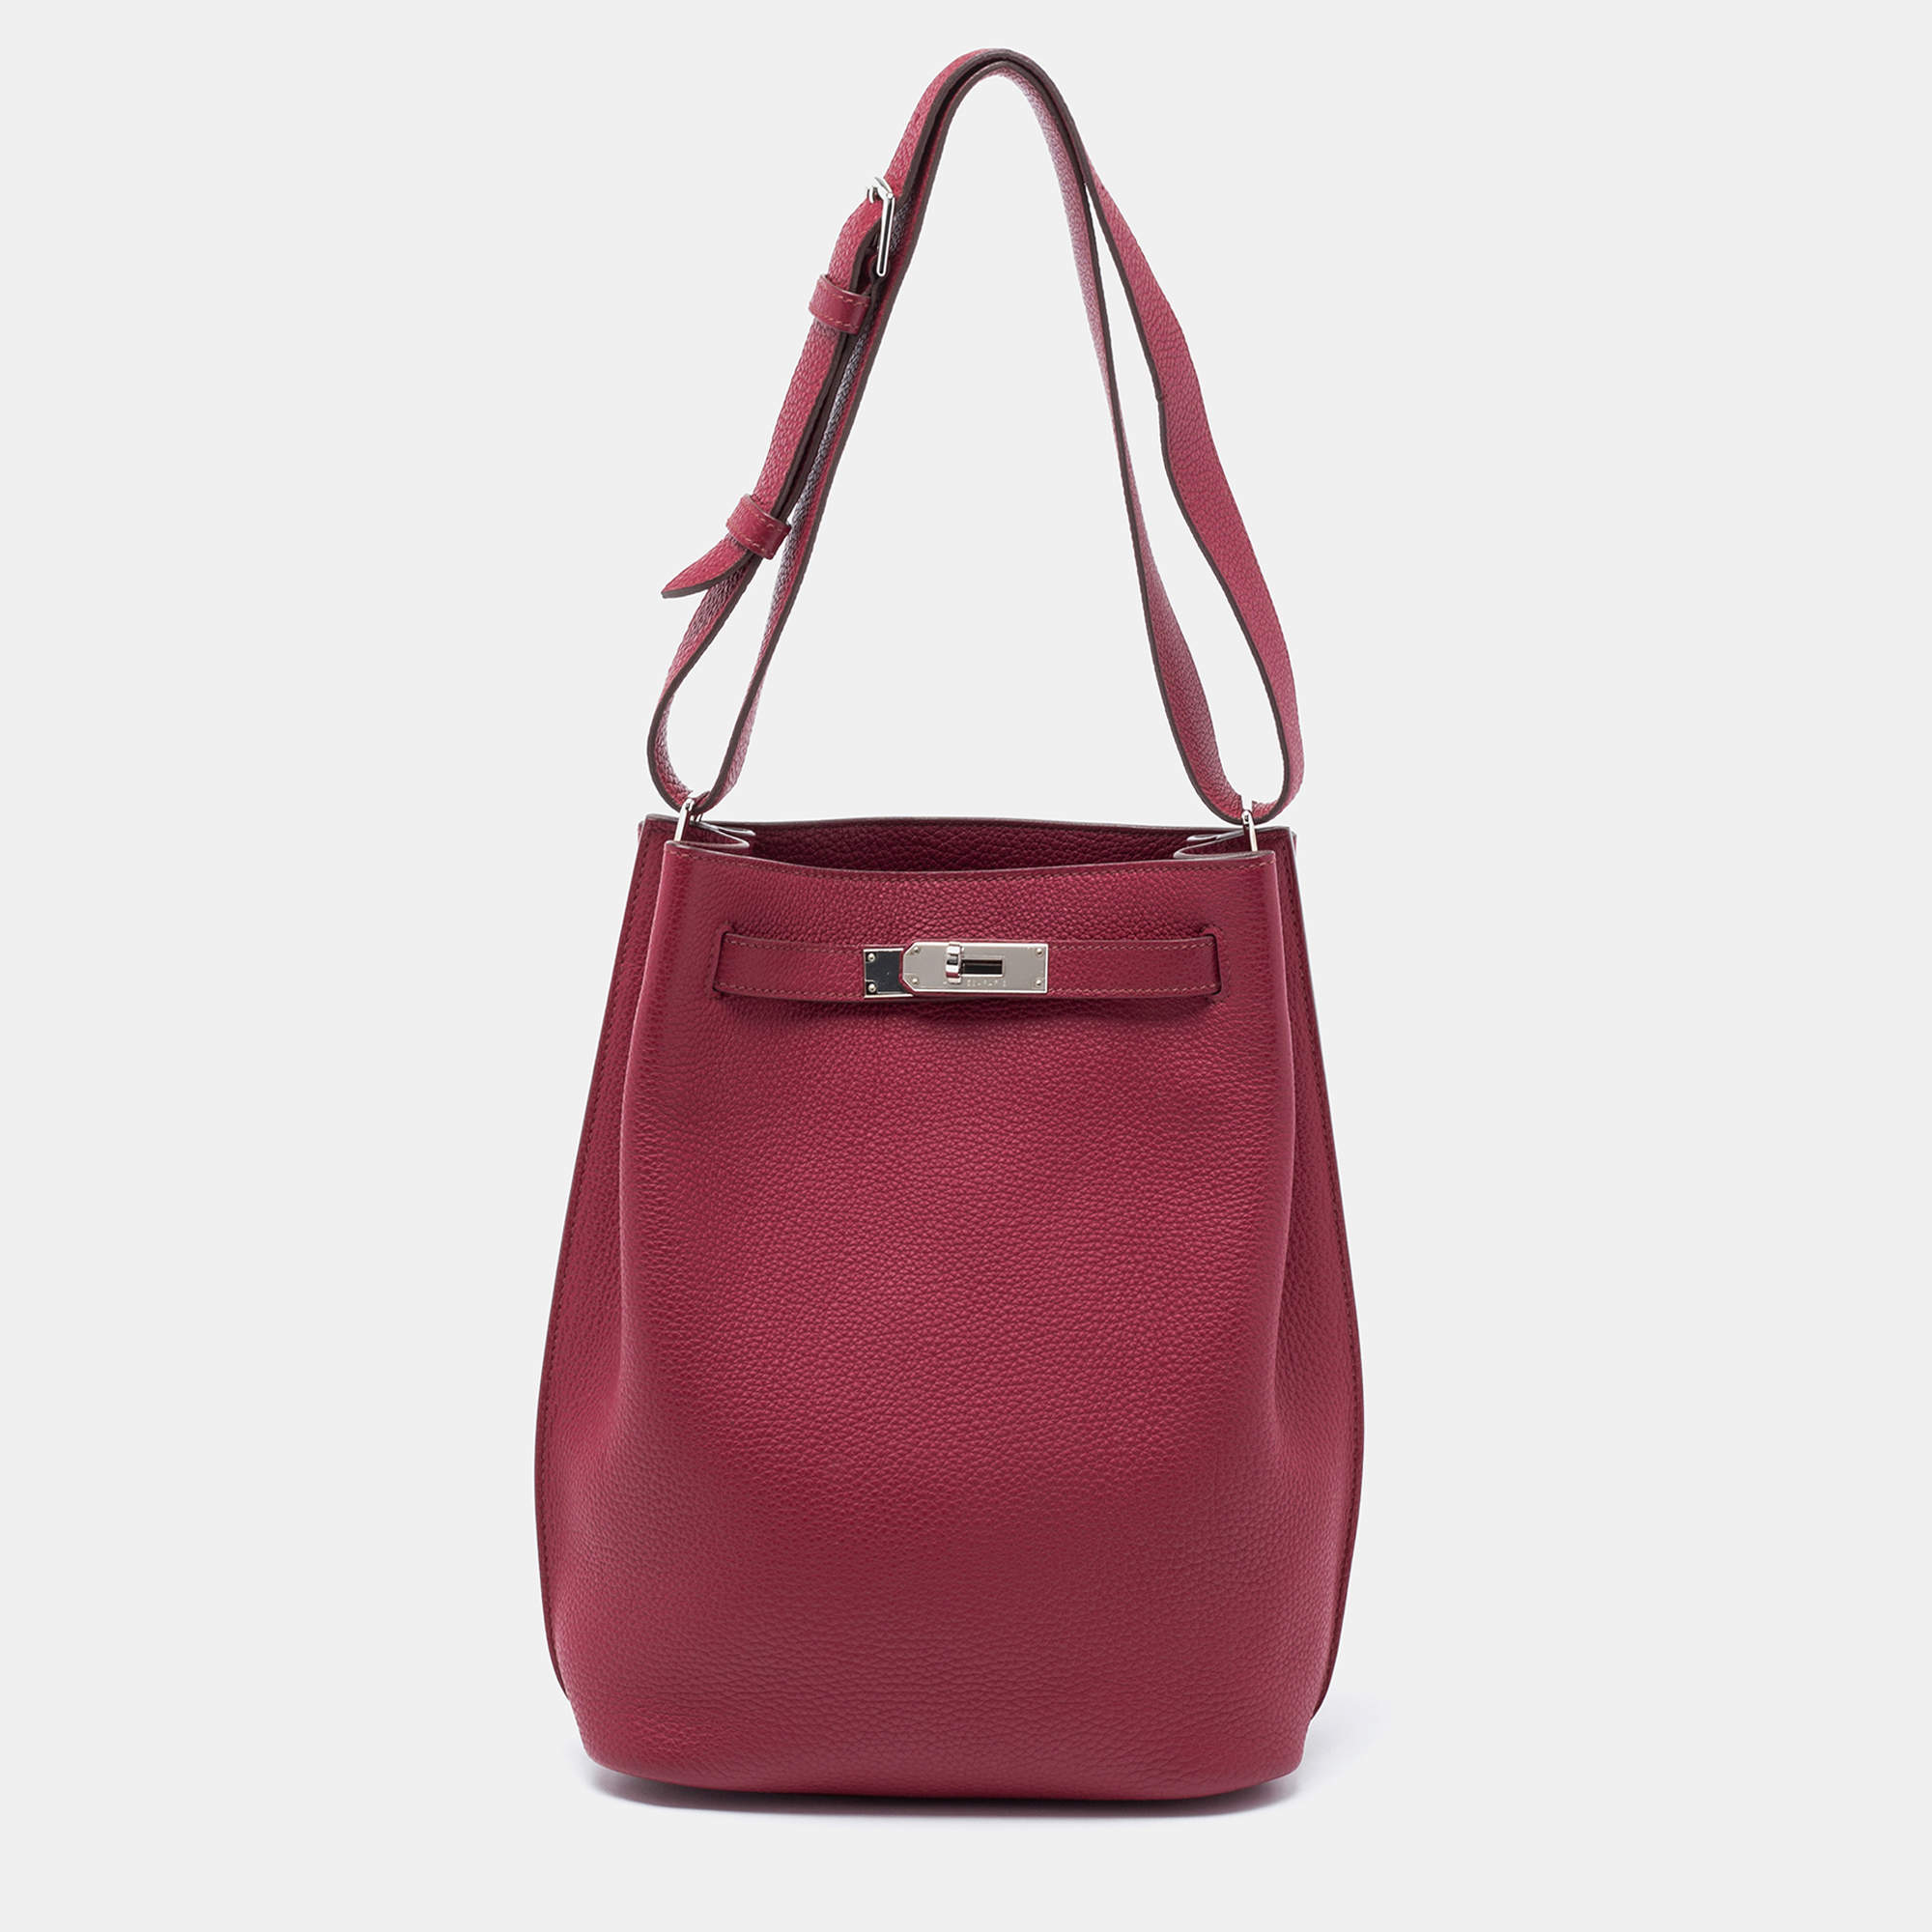 HERMES Birkin 25 Handbag Togo leather Red White Used Women D GHW